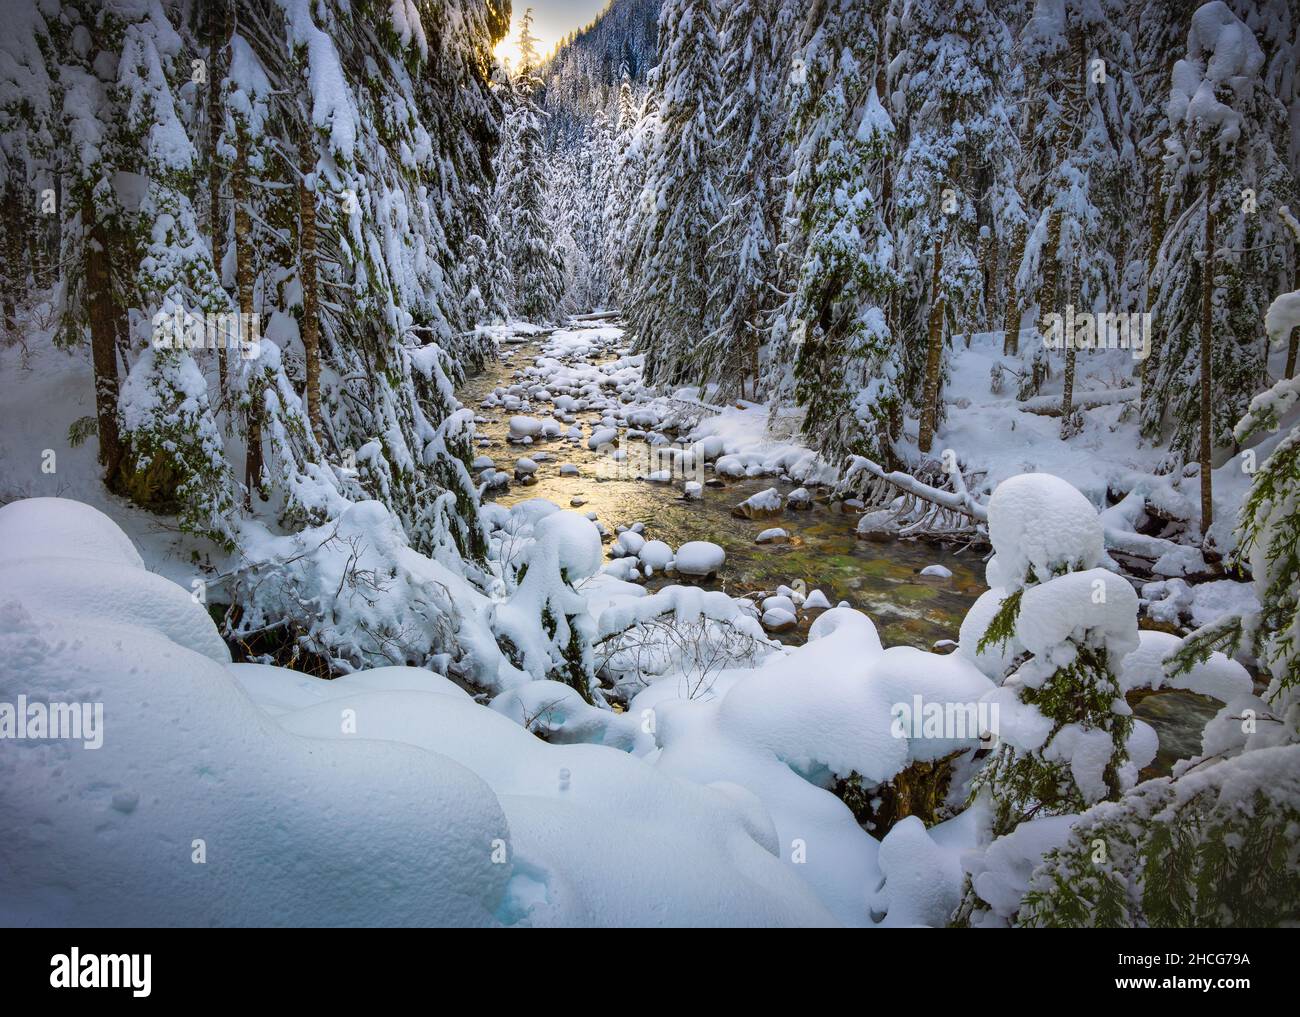 Franklin Falls trail near Snoqualmie Pass in Washington state. Stock Photo